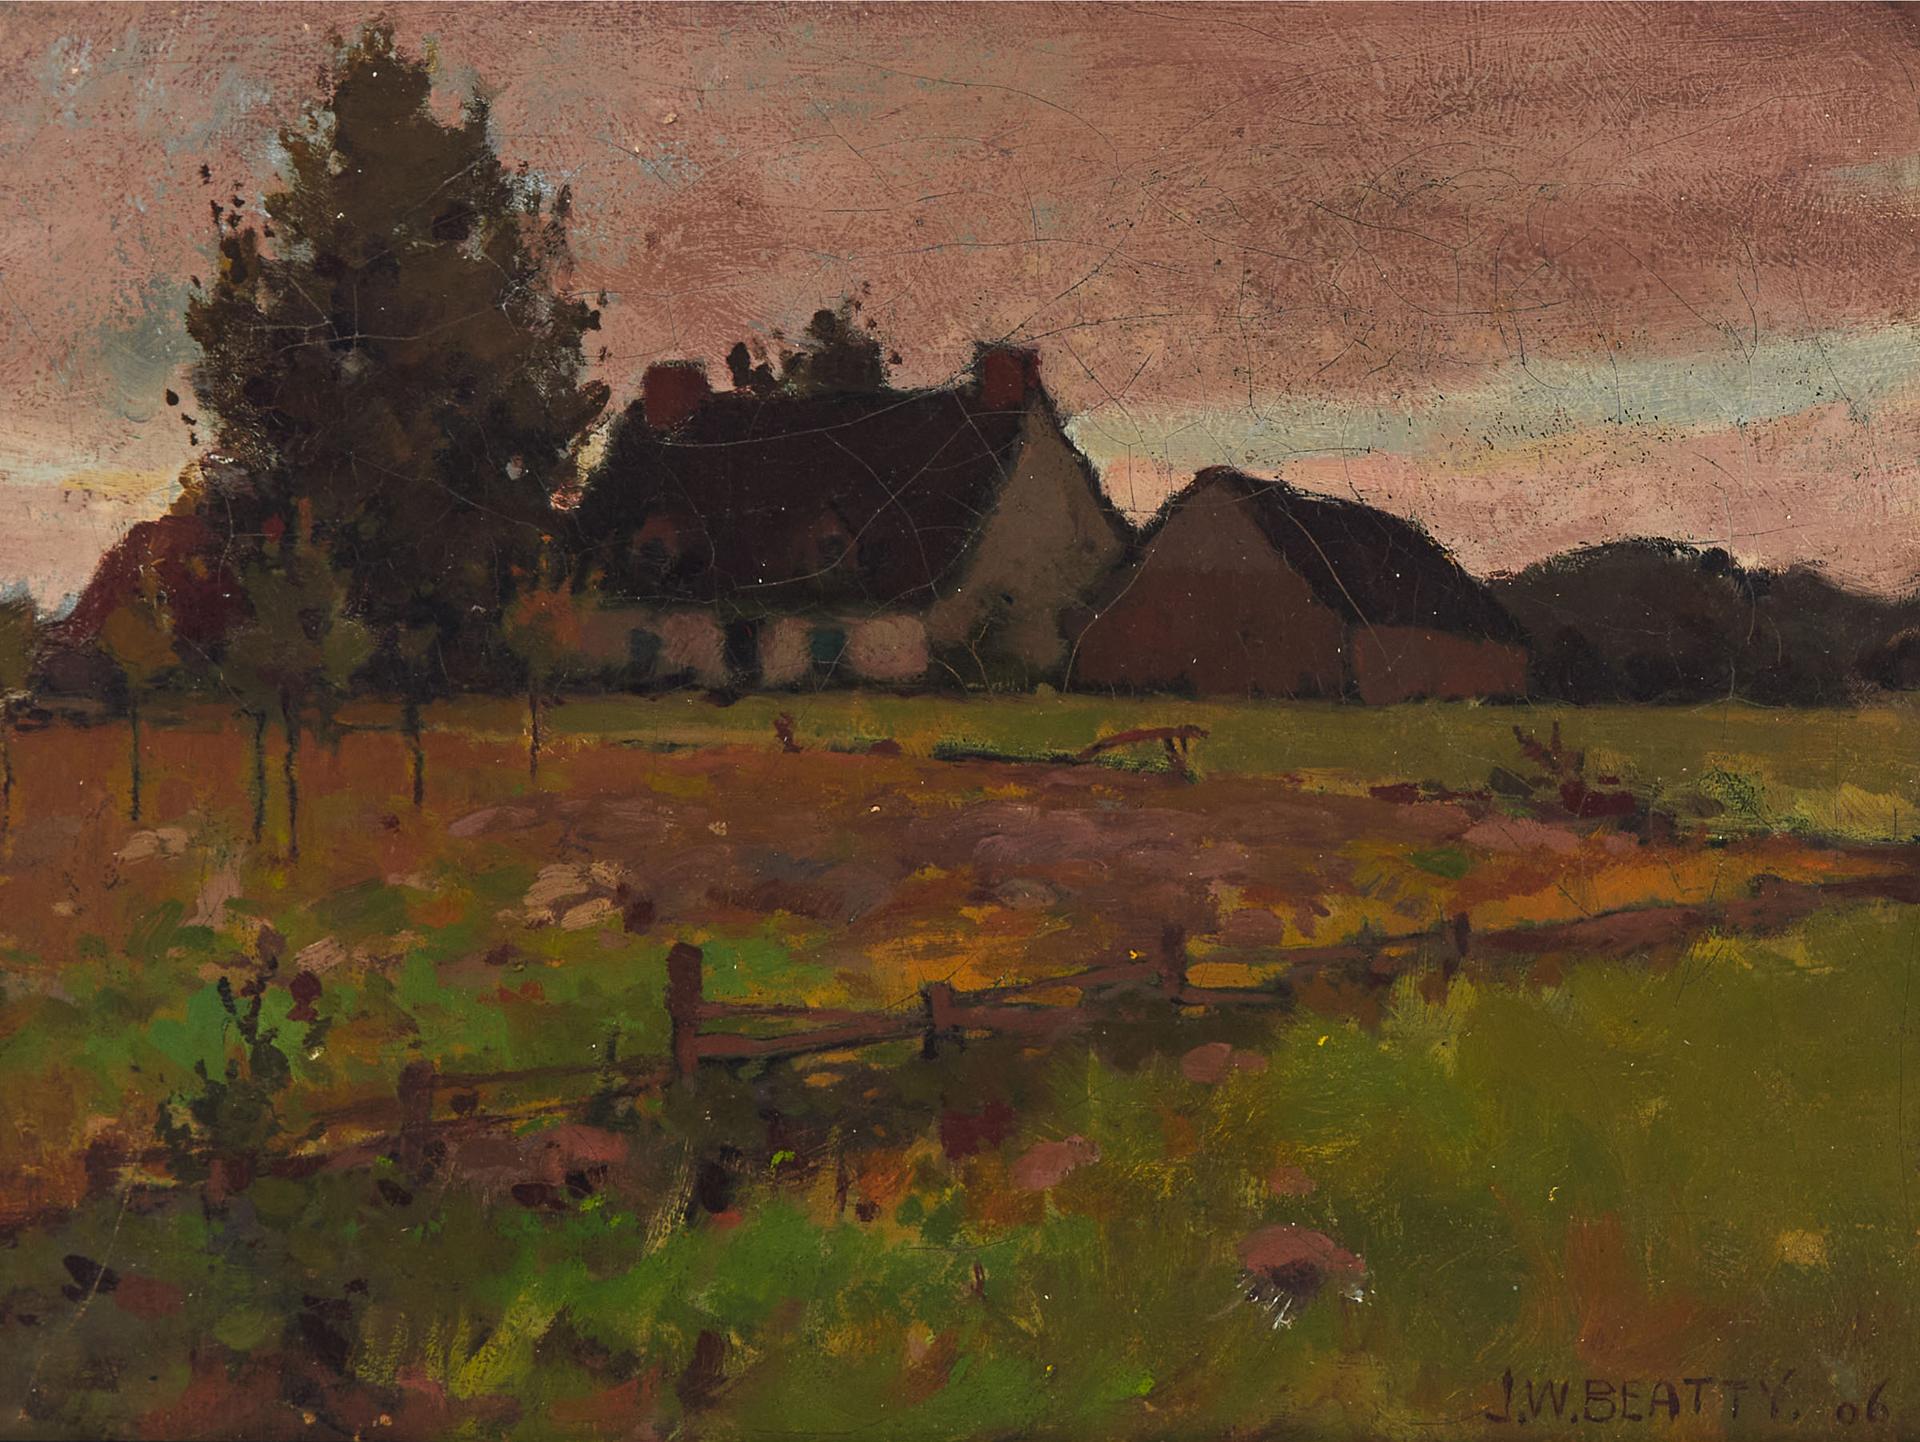 John William (J.W.) Beatty (1869-1941) - Farmhouse, 1906